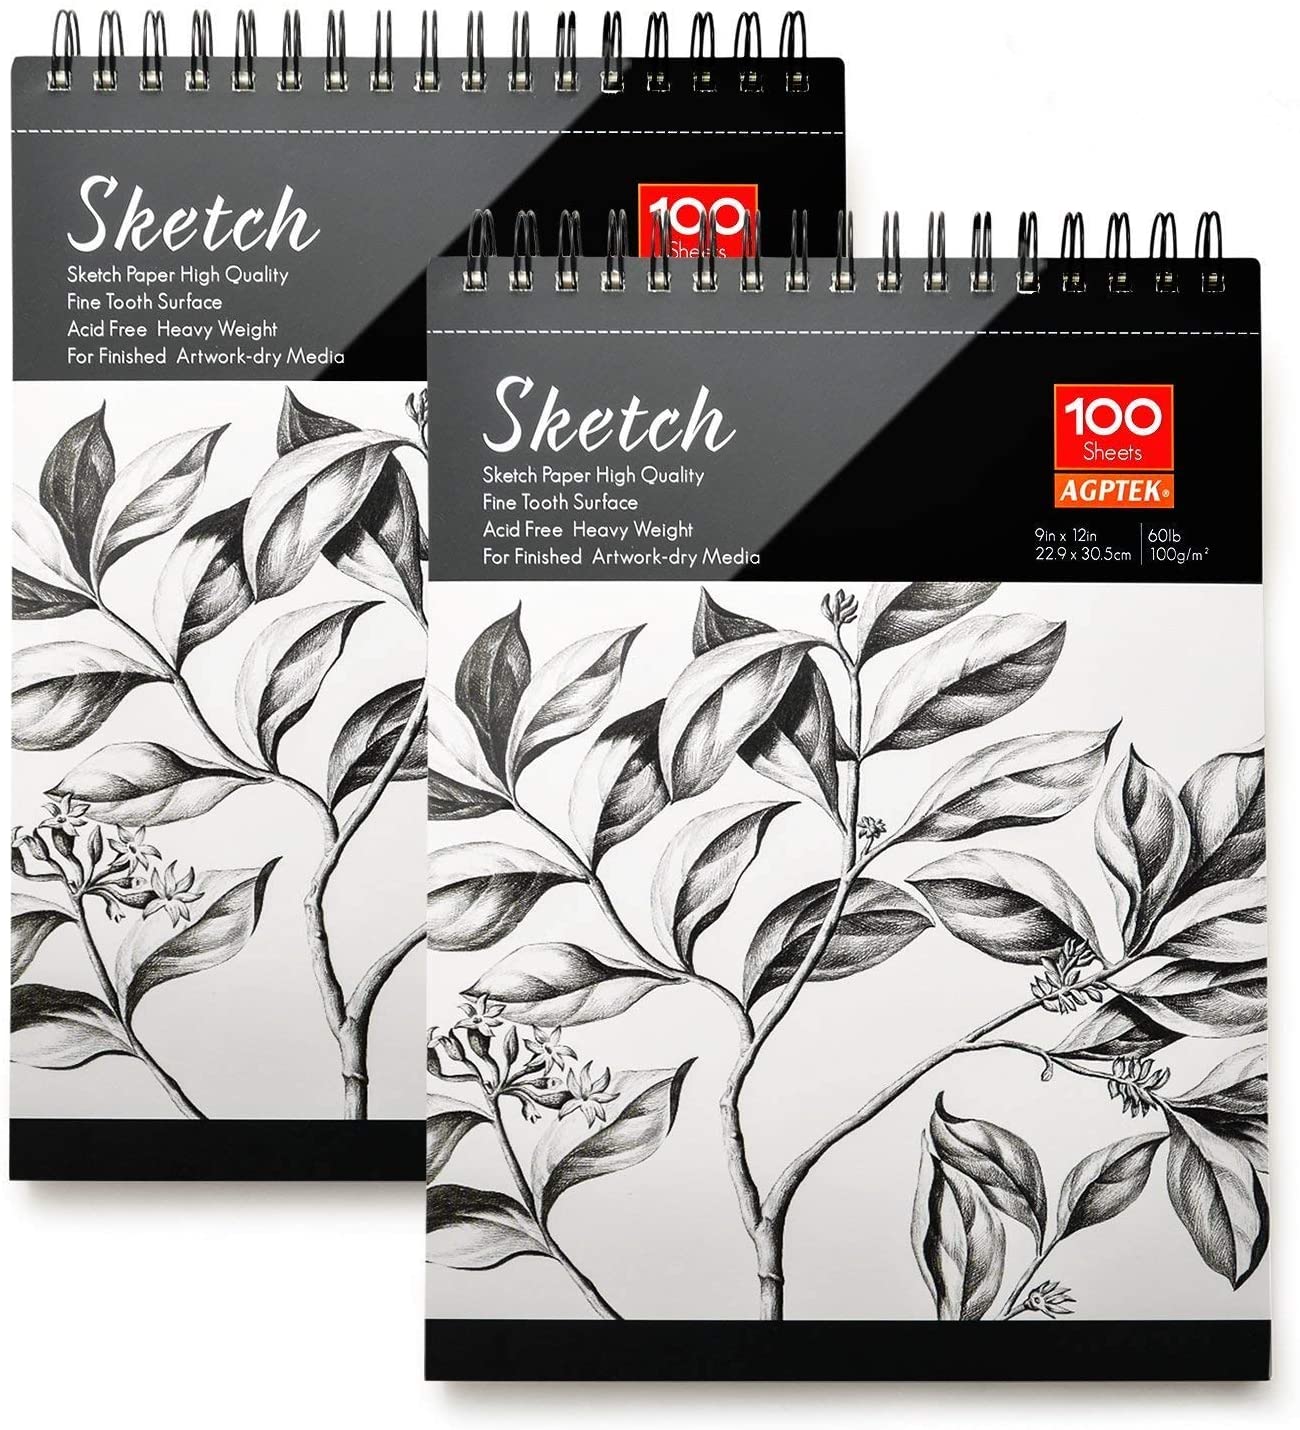 5.5 X 8.5 Spiral Sketchbook 2 Pack 200 Sheets Free Sketch Pads for